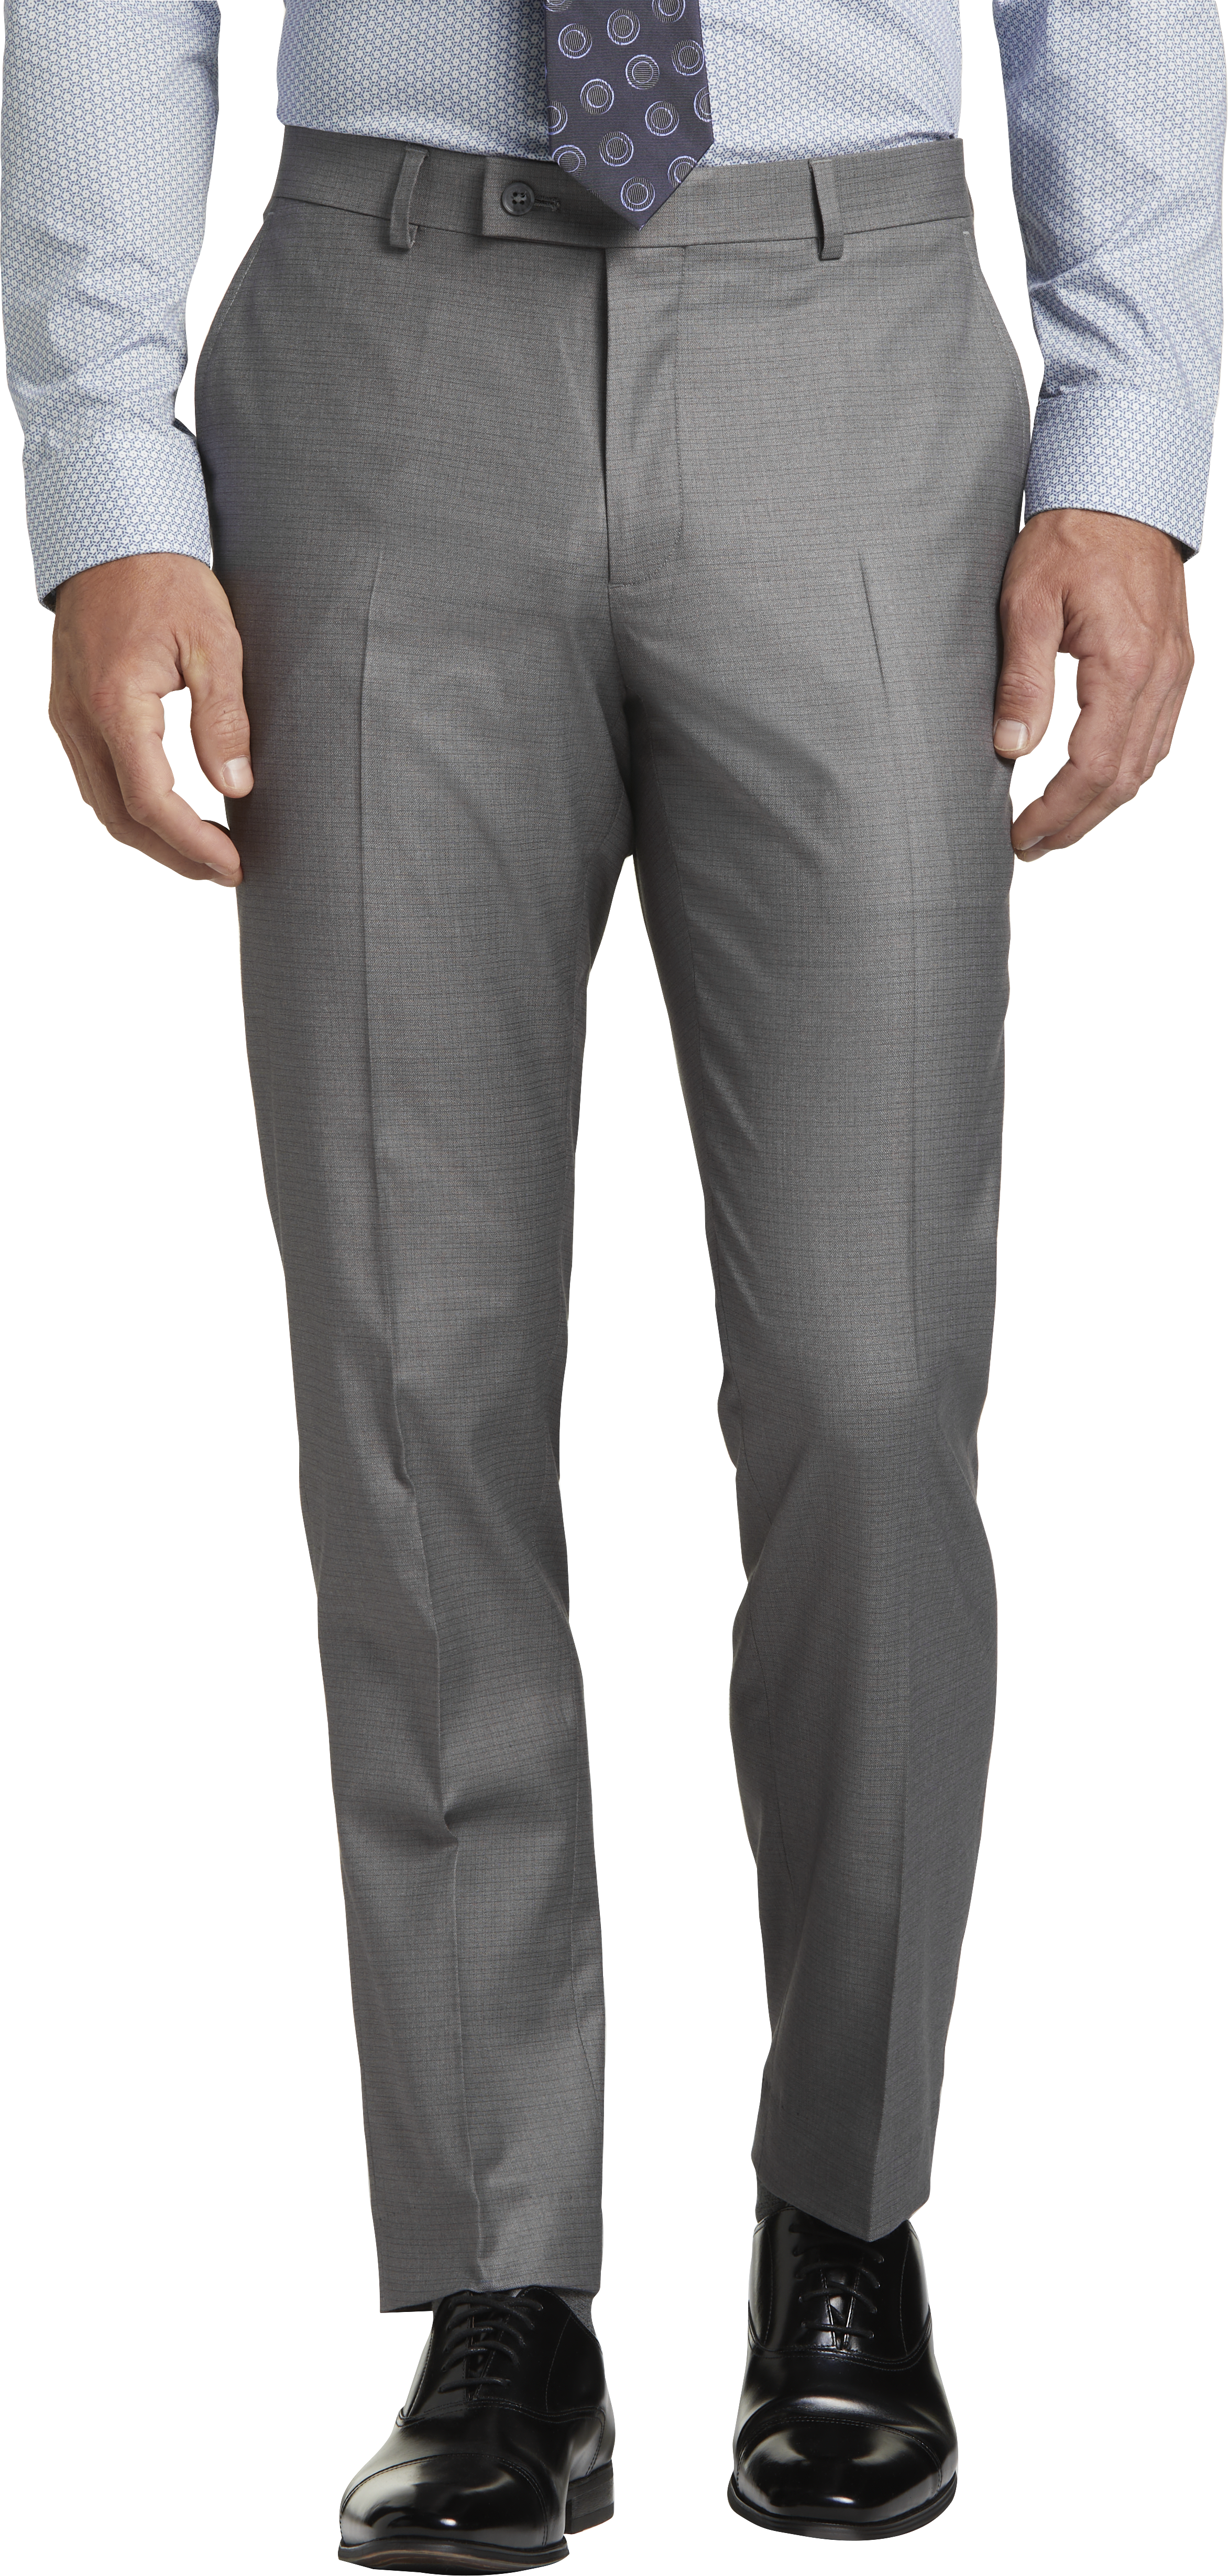 Wilke-Rodriguez Slim Fit Suit Separates Pant